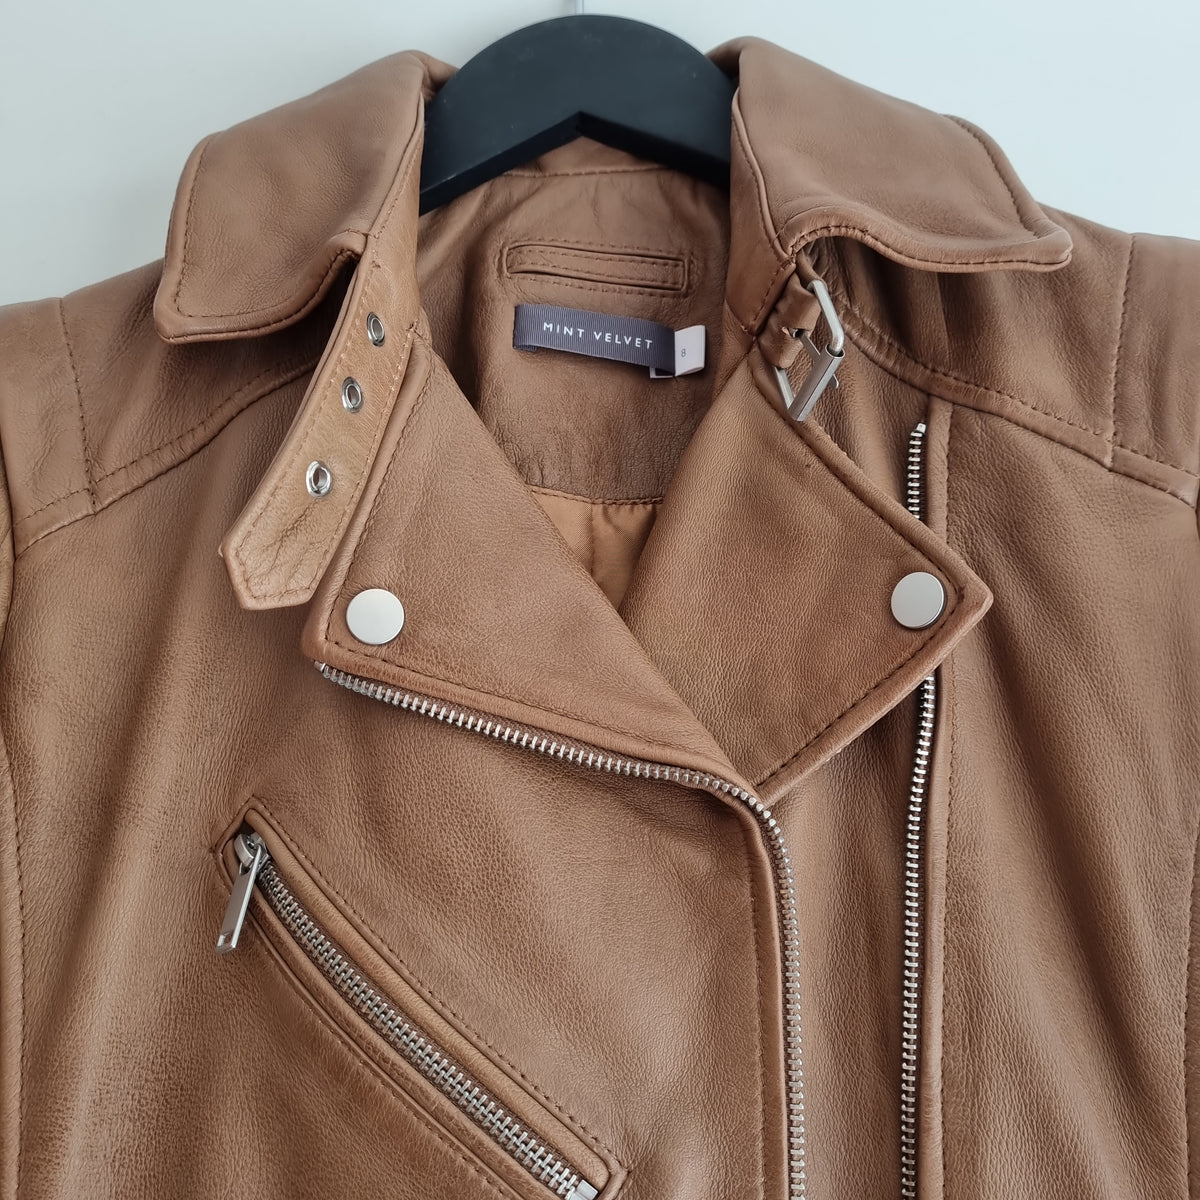 Mint Velvet leather biker jacket Tan Size 8